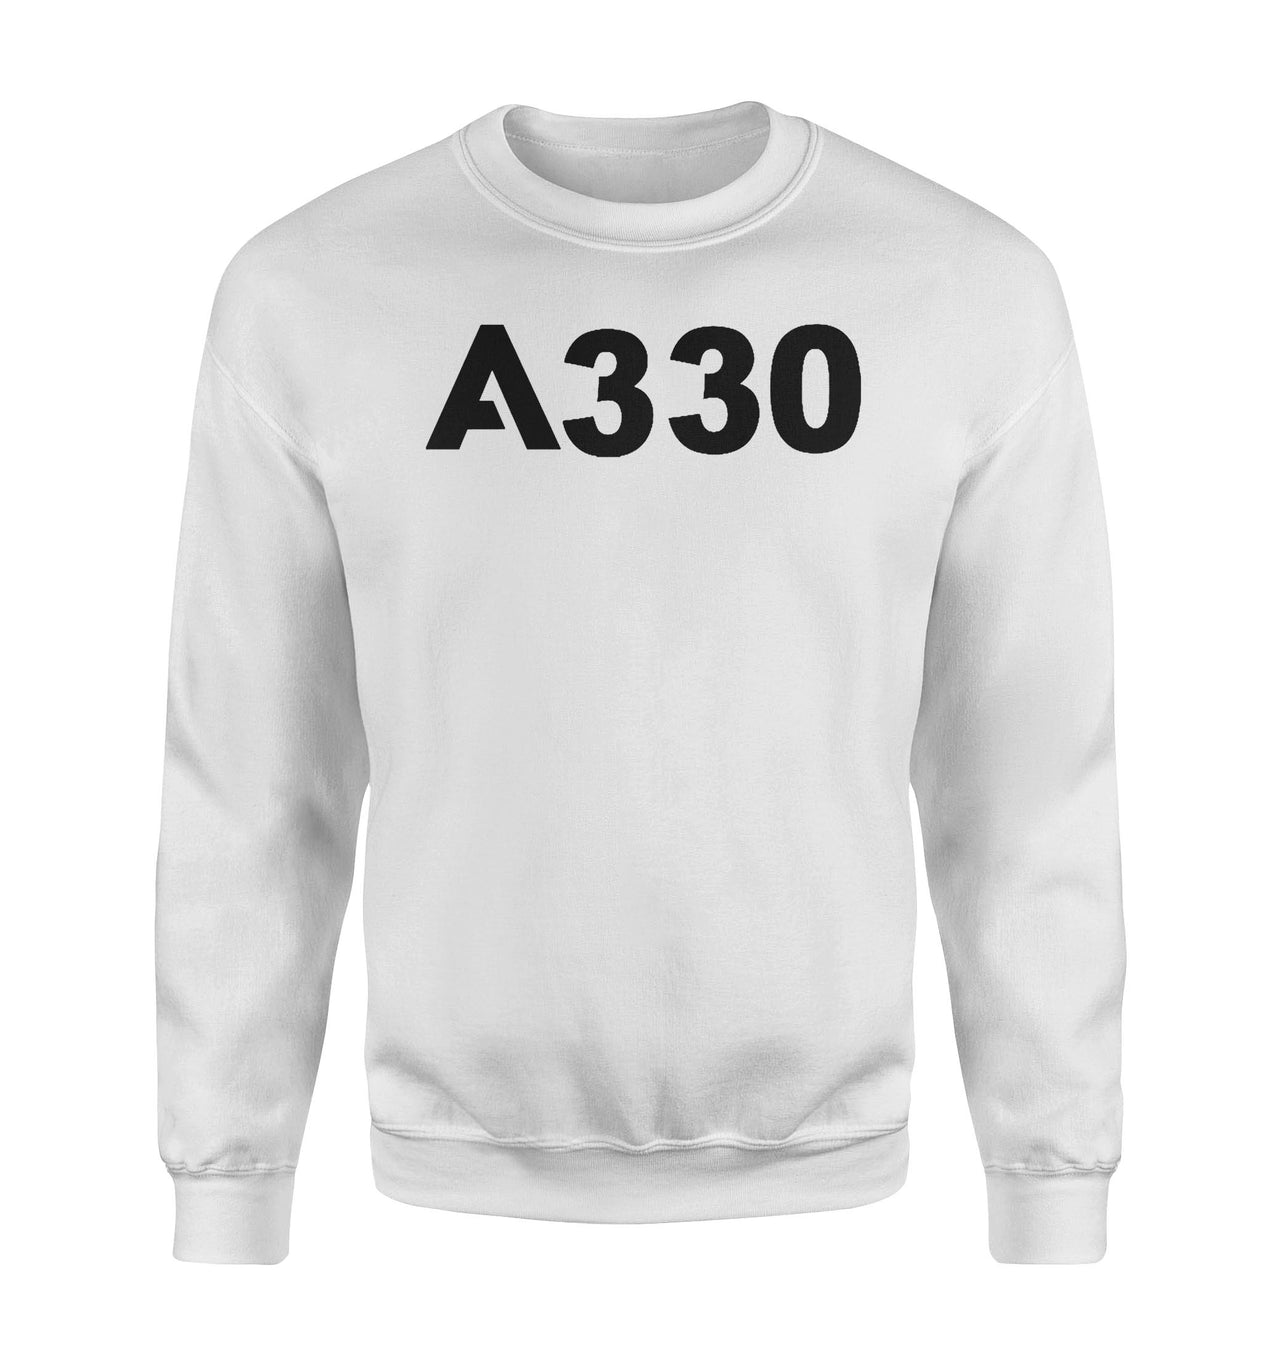 A330 Flat Text Designed Sweatshirts